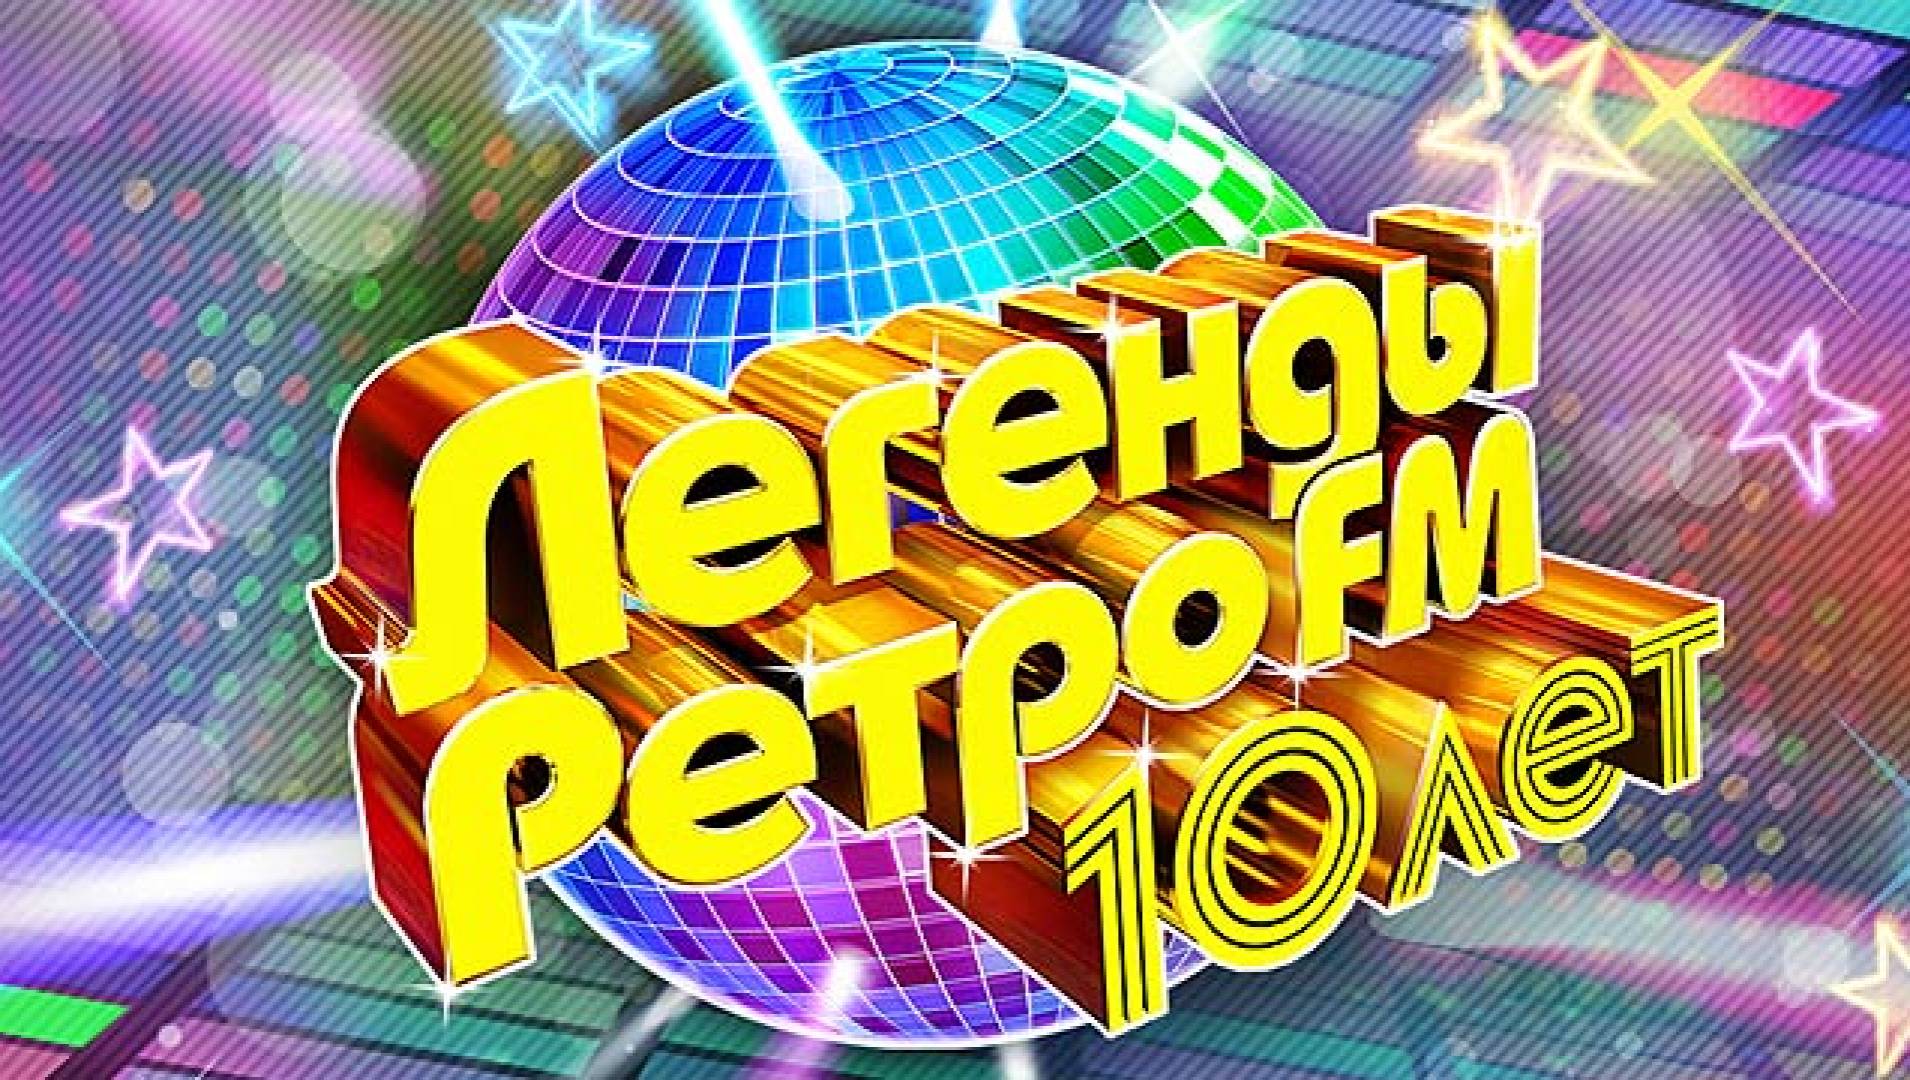 Легенды Ретро FM - ТВ-шоу